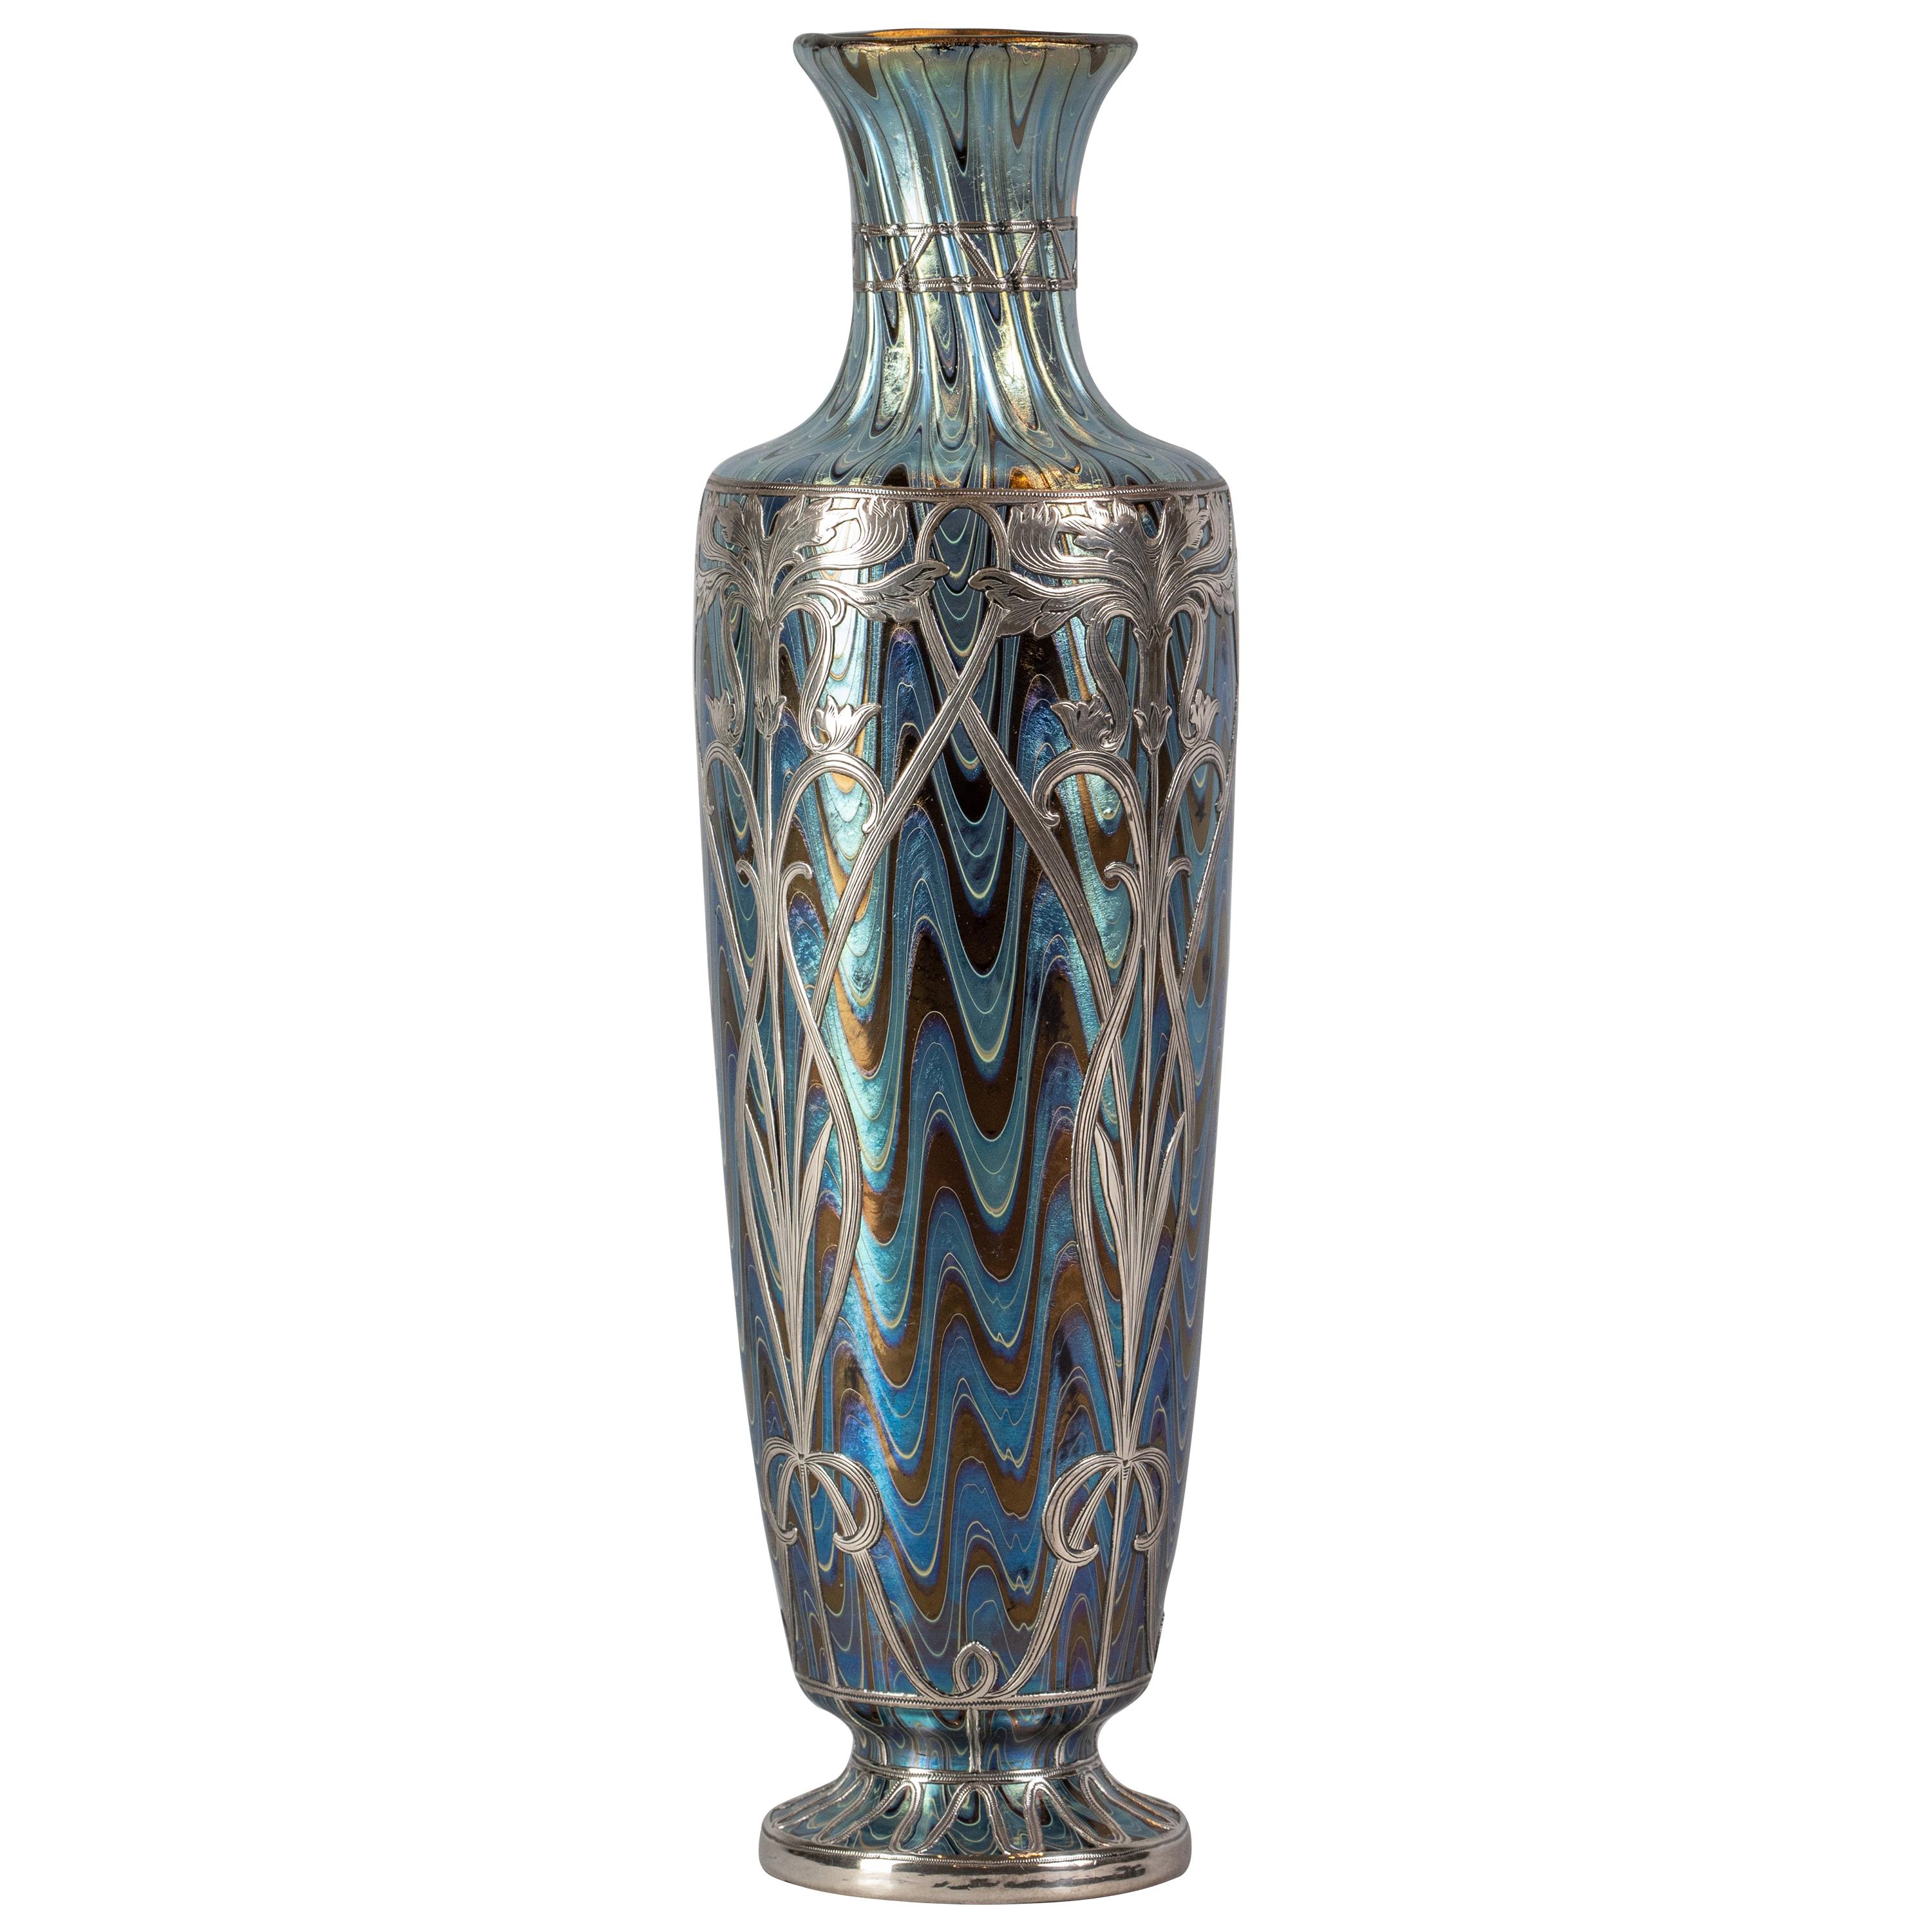 Loetz Silver Overlay Glass Vase, circa 1910